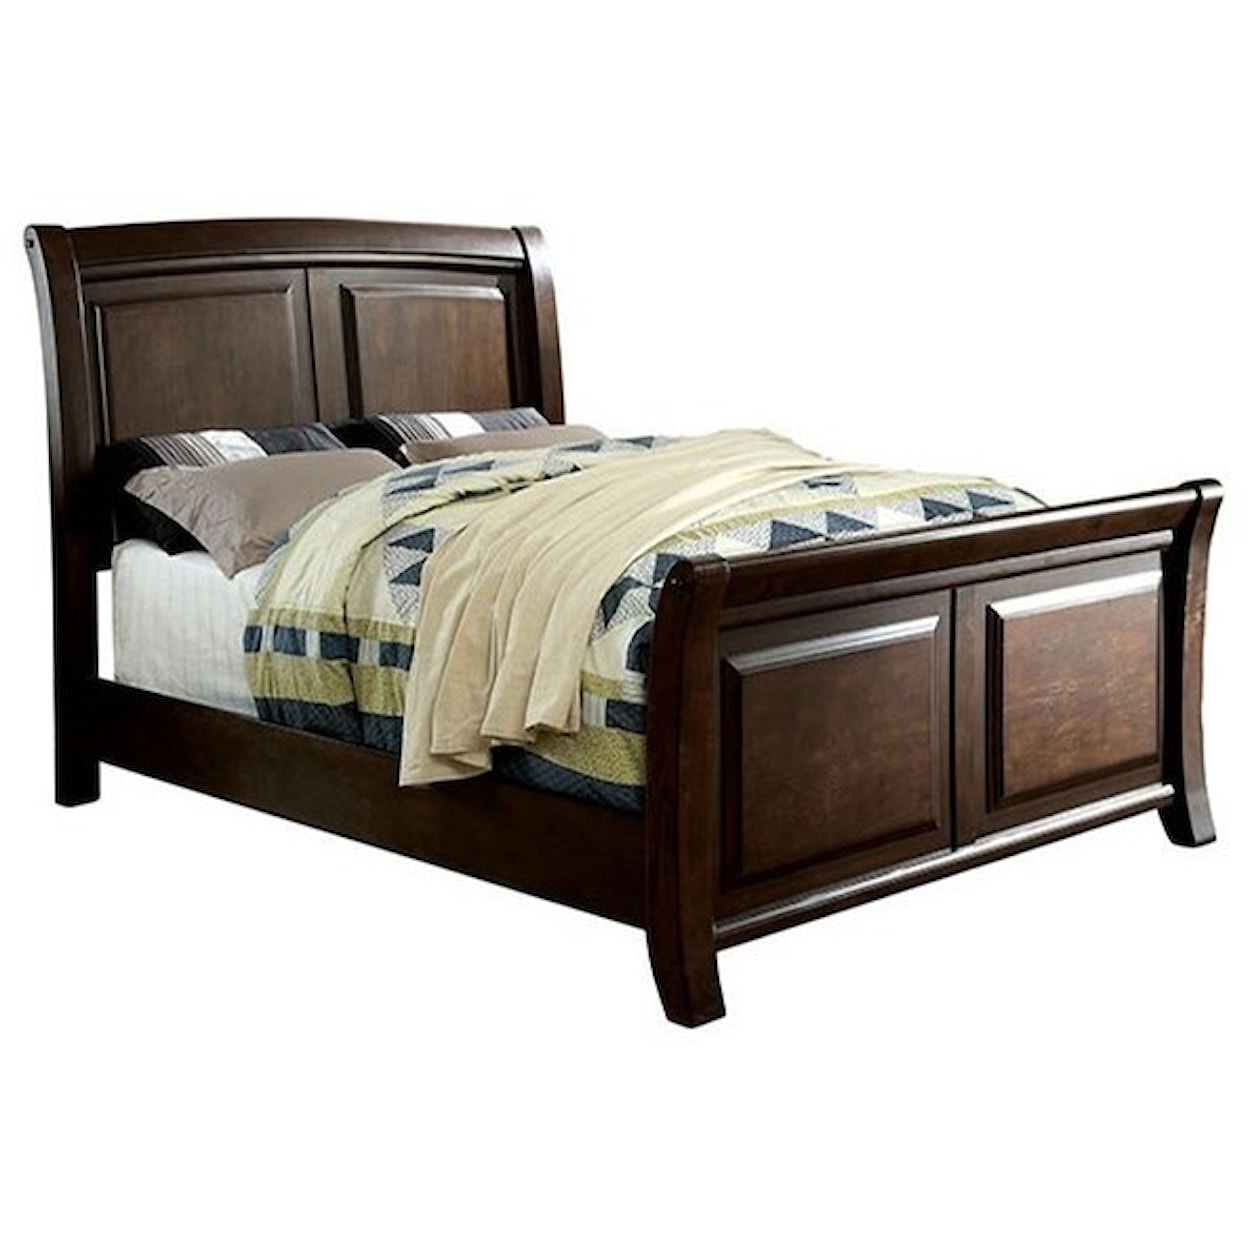 Furniture of America Litchville Queen Sleigh Bed